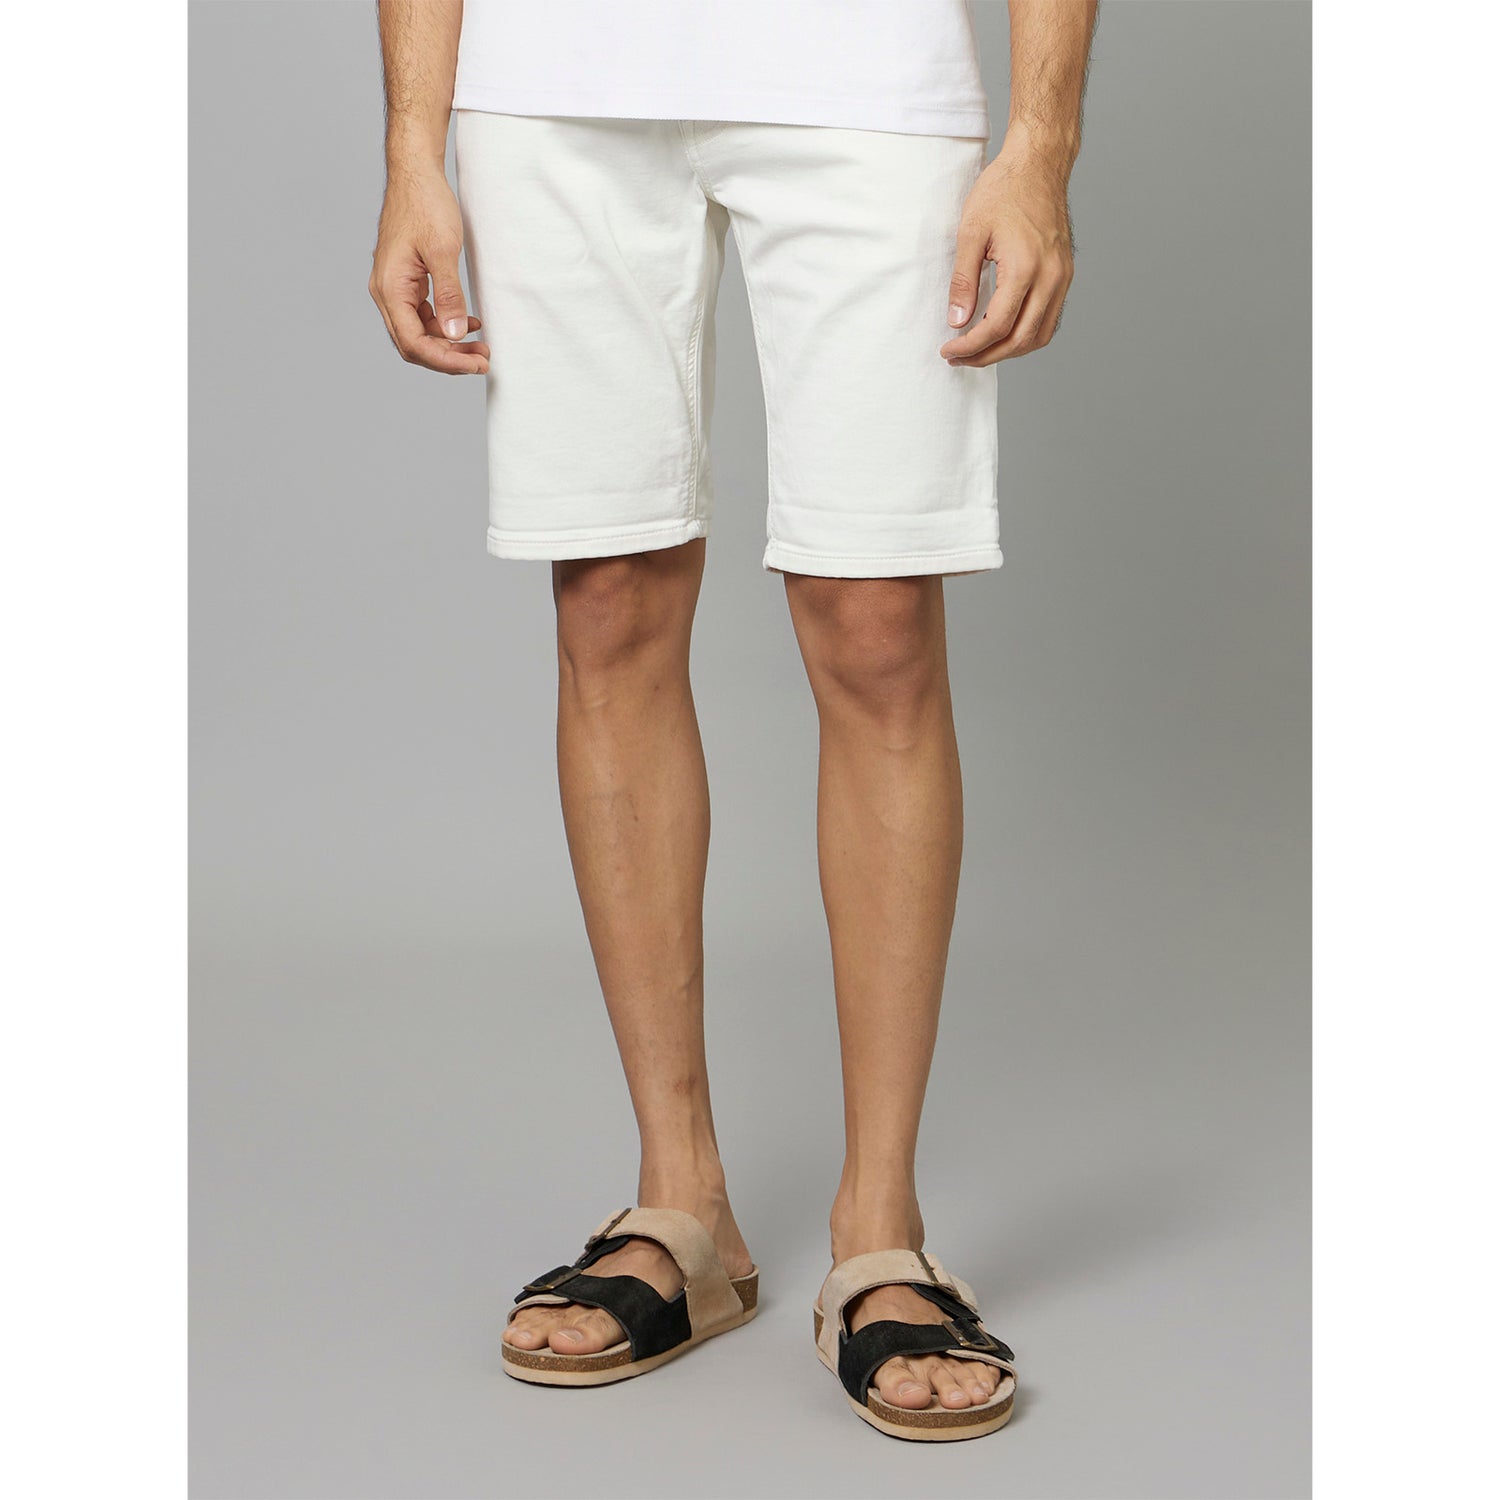 Off White Mid-Rise Regular Fit Cotton Shorts (DOKNITBM)